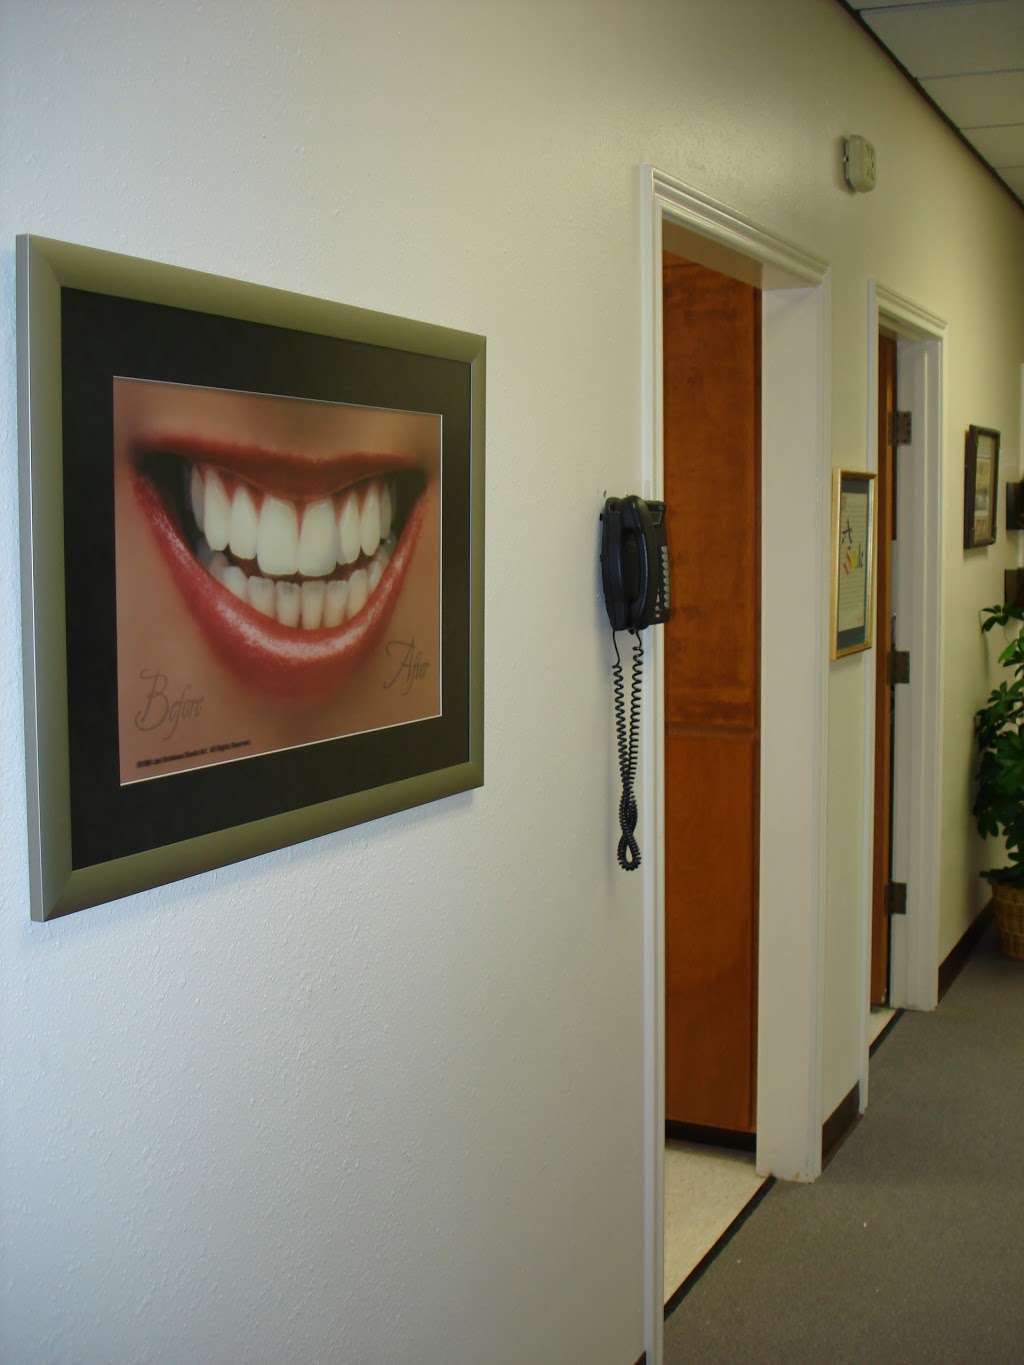 Dickinson Dental: Dr. Maxwell C. Elliott DDS | 1915 FM 517 Rd E, Dickinson, TX 77539, USA | Phone: (281) 534-7112